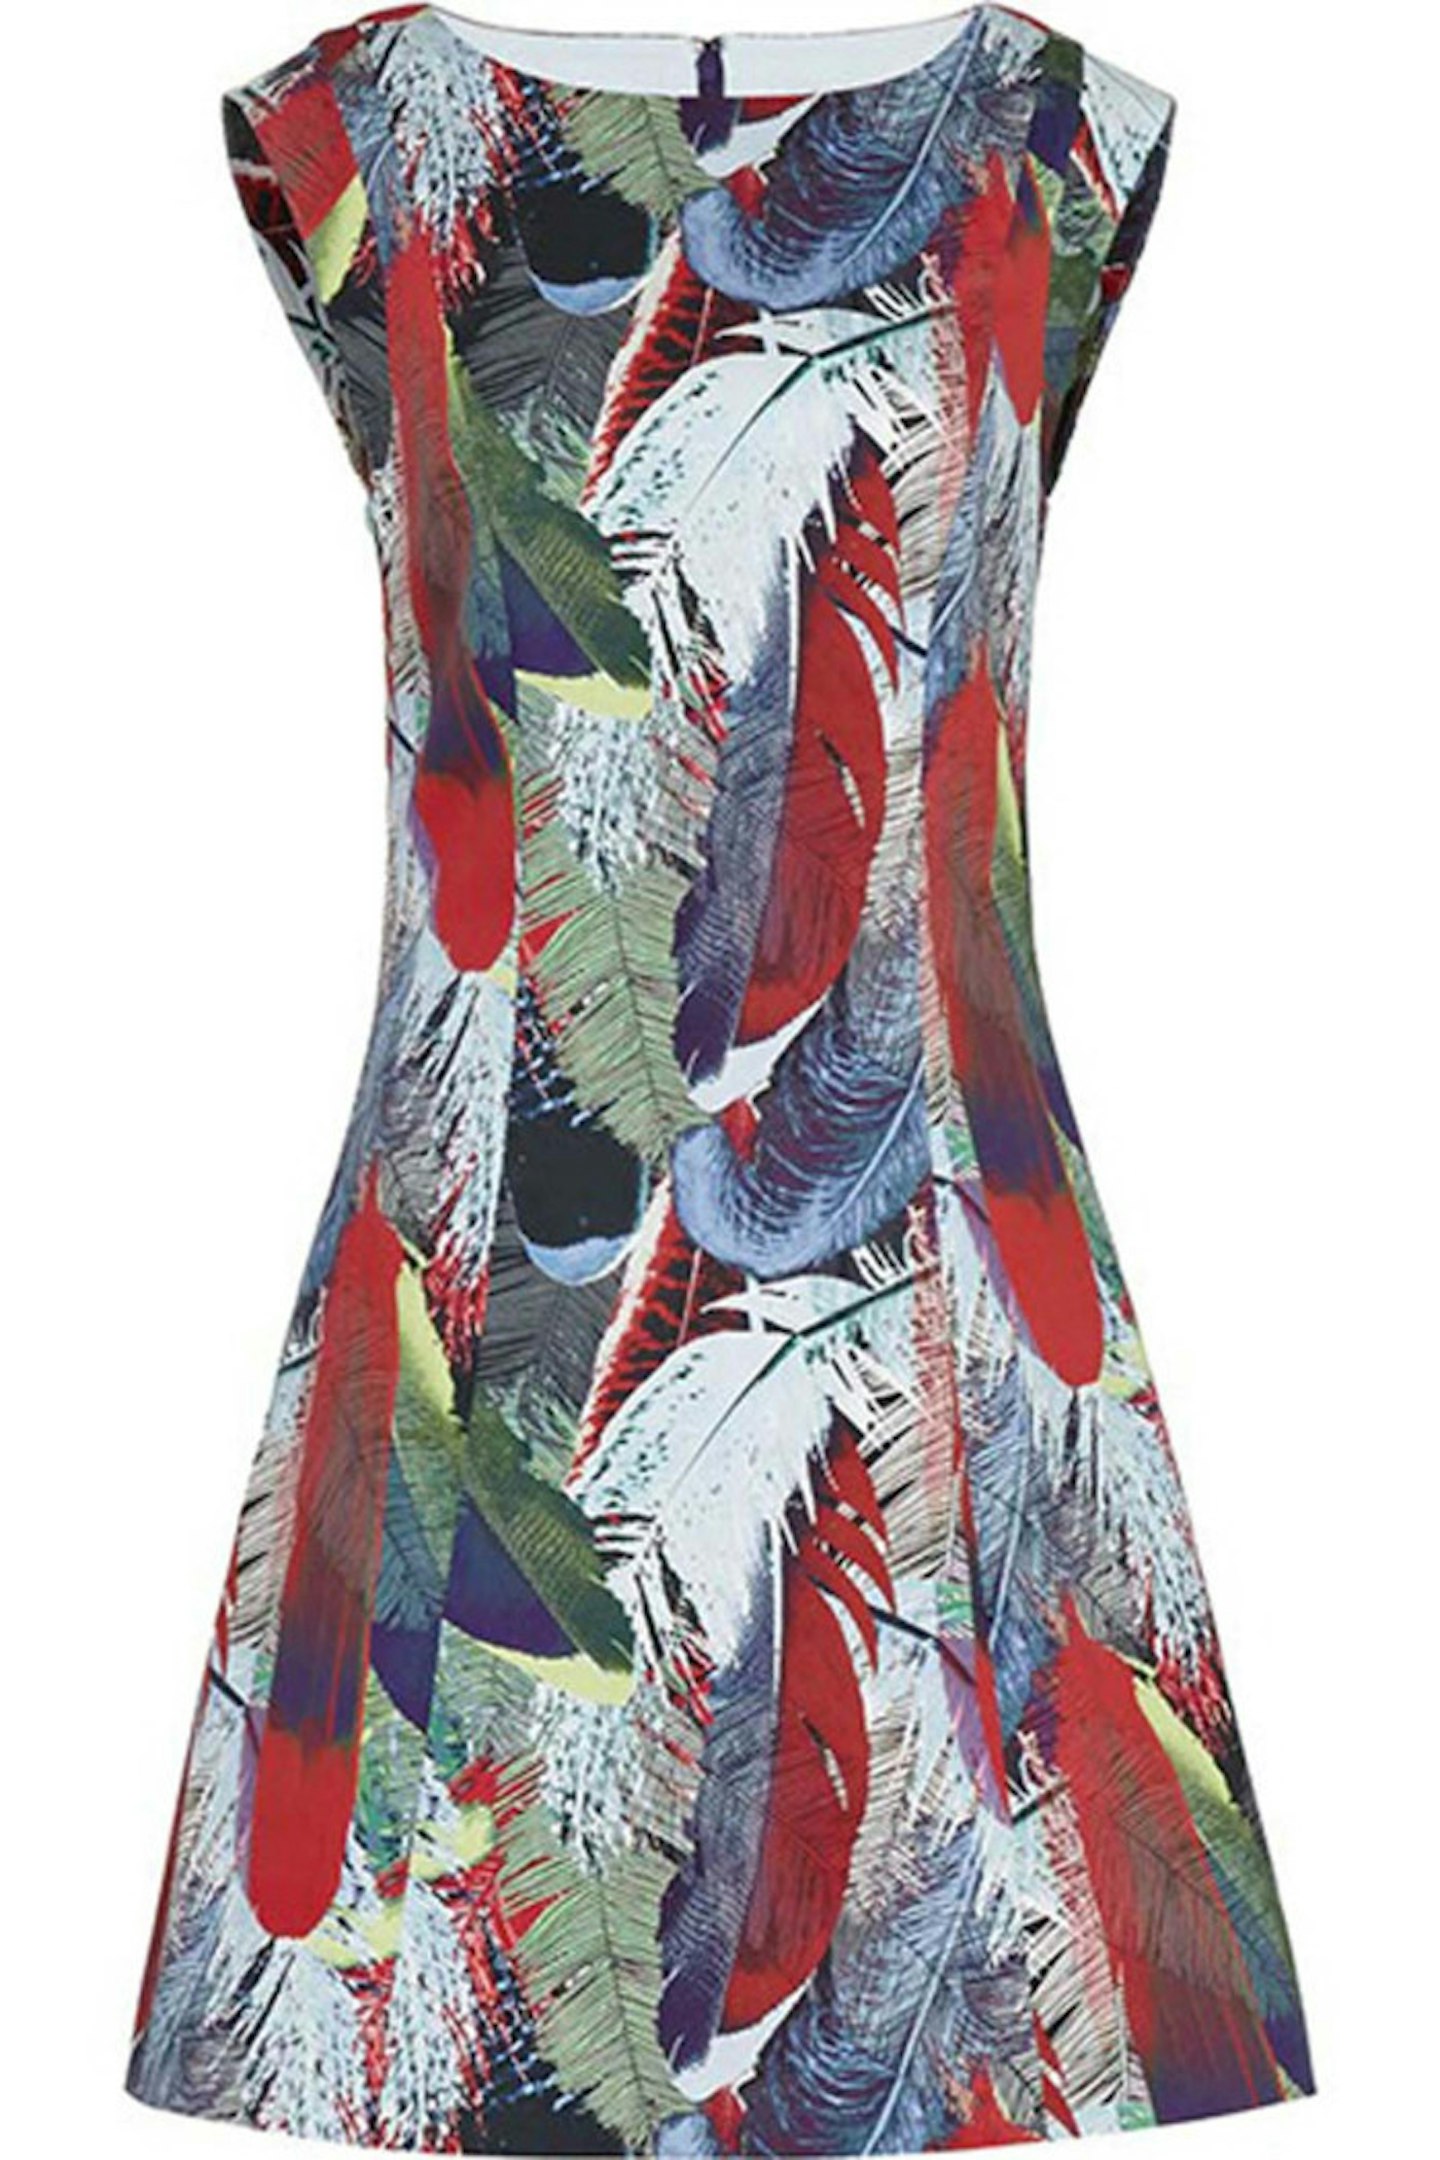 46. Jungle Feather Print Dress, £149, Reiss